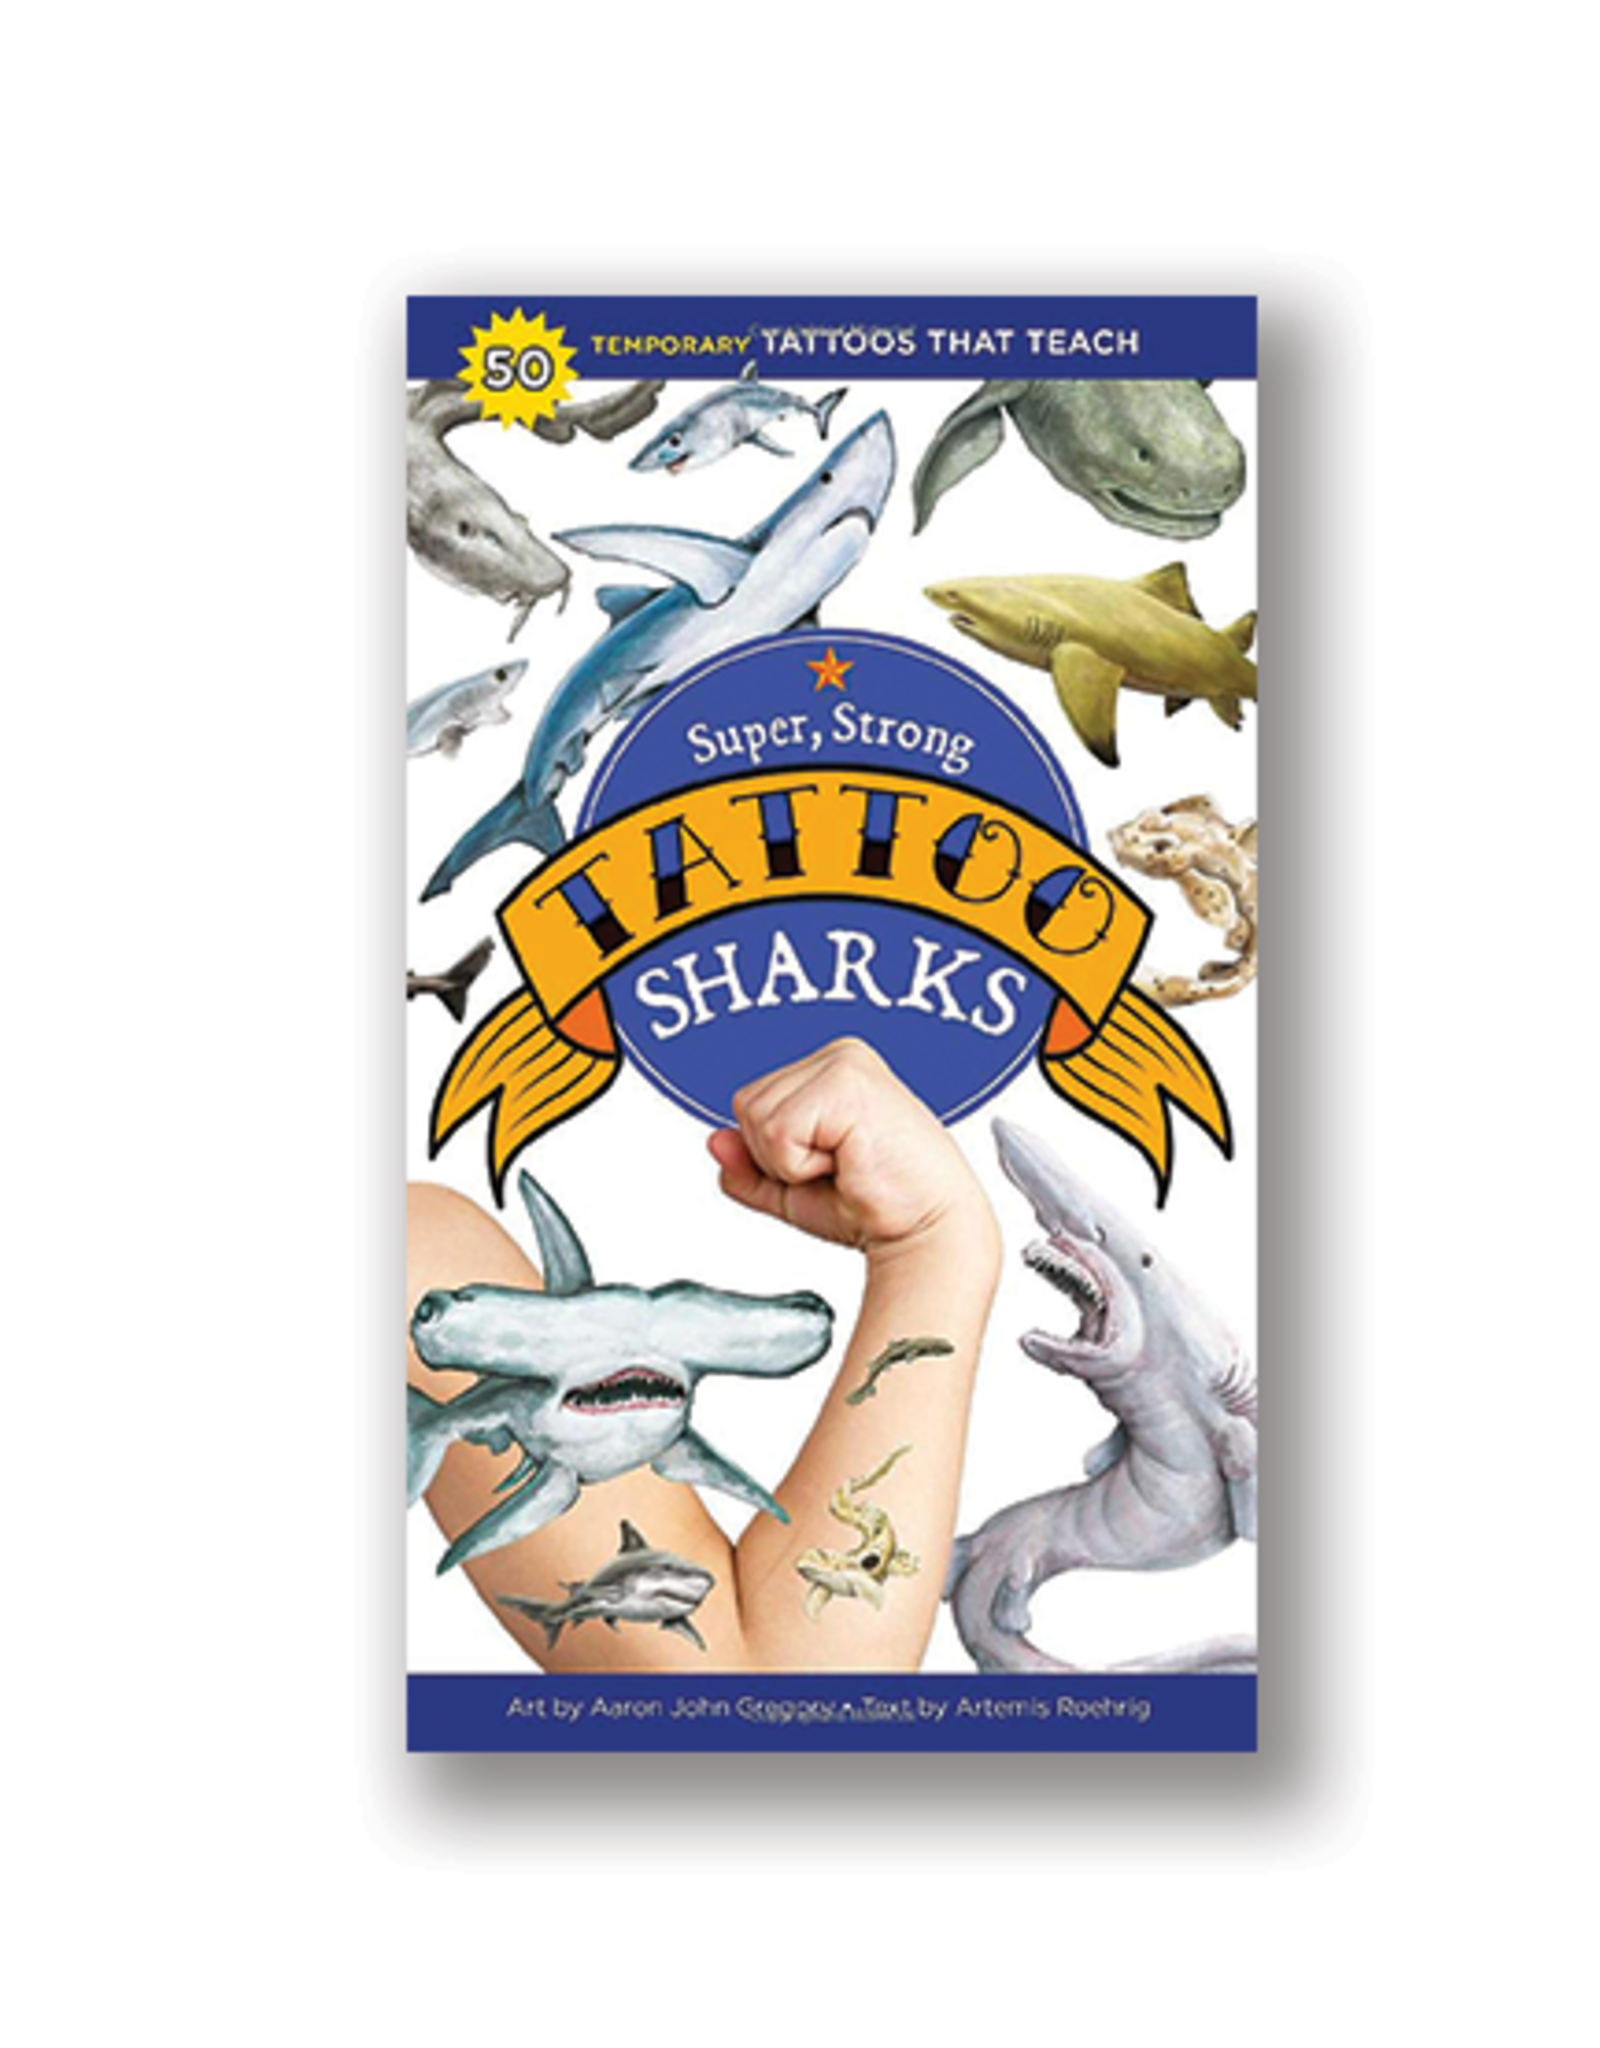 Workman Publishing Super, Strong Tattoo Sharks: 50 Temporary Tattoos That Teach